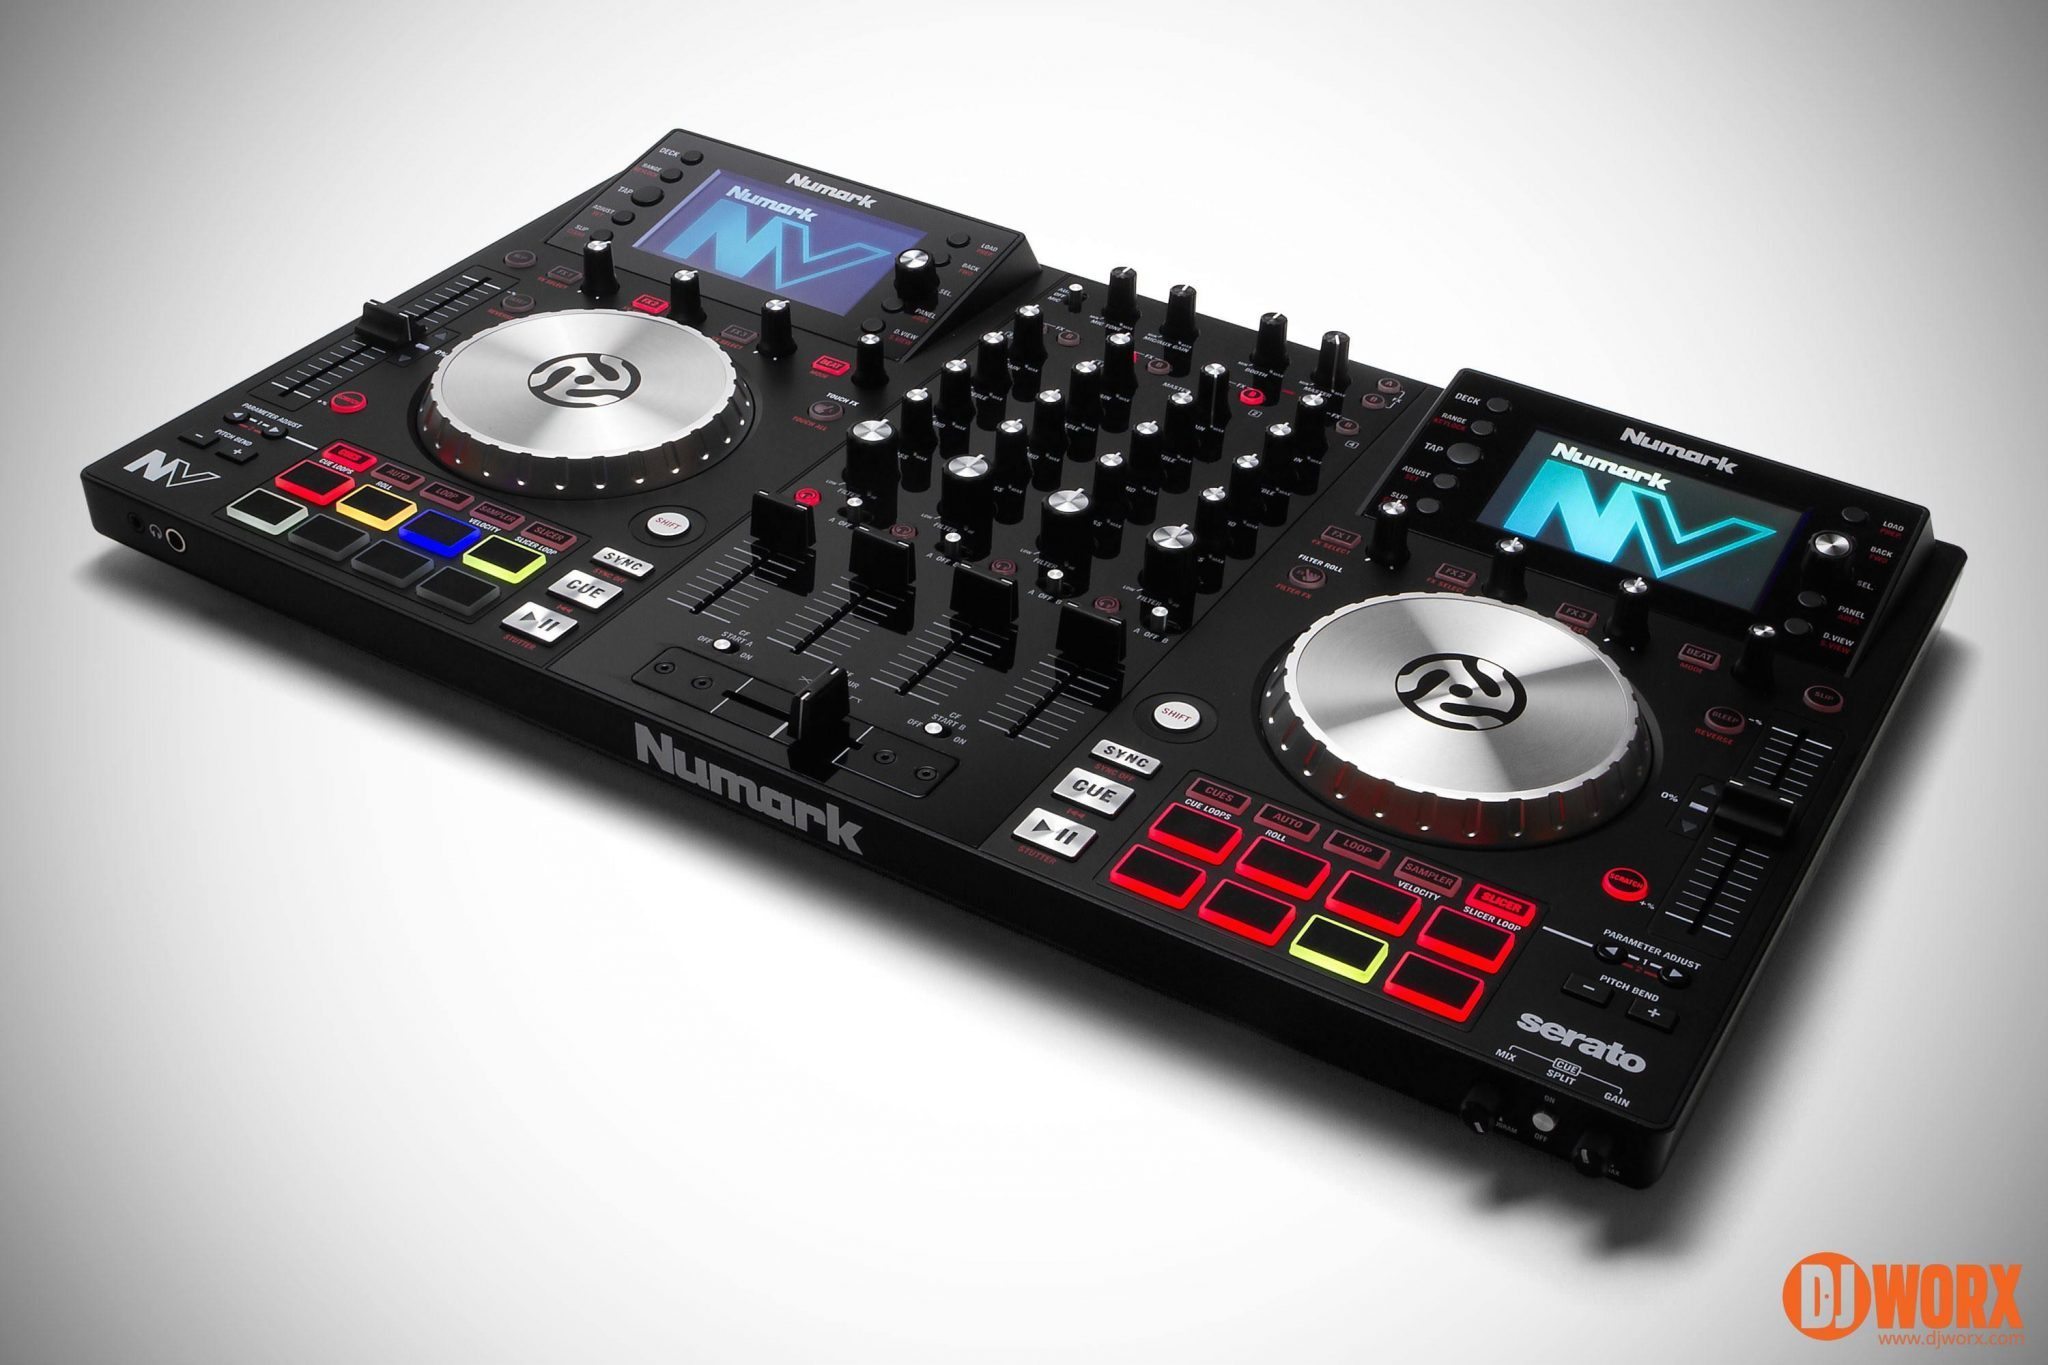 REVIEW: Numark NV Serato DJ Controller • DJWORX